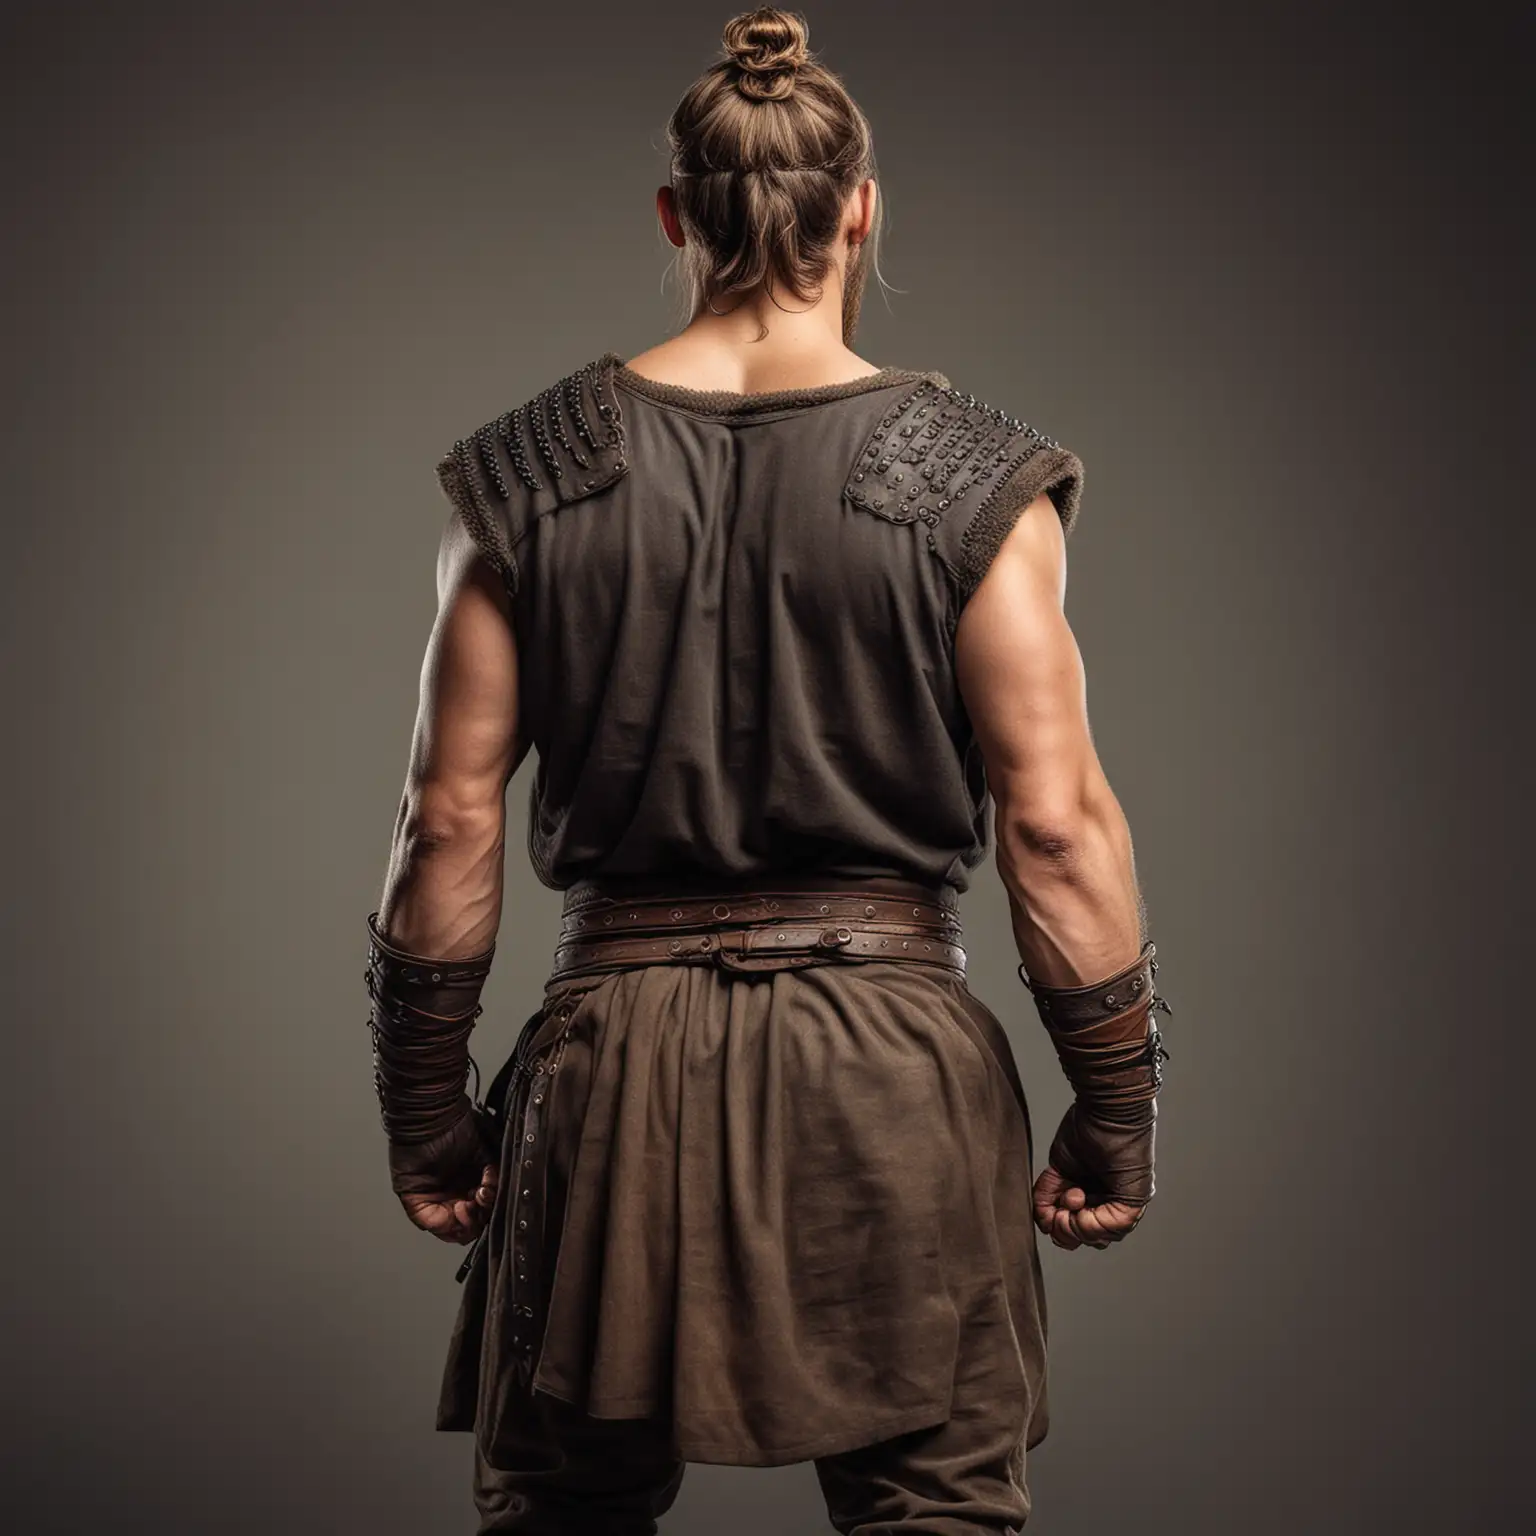 Muscular Viking Warrior with Tied Man Bun Full Body Back View